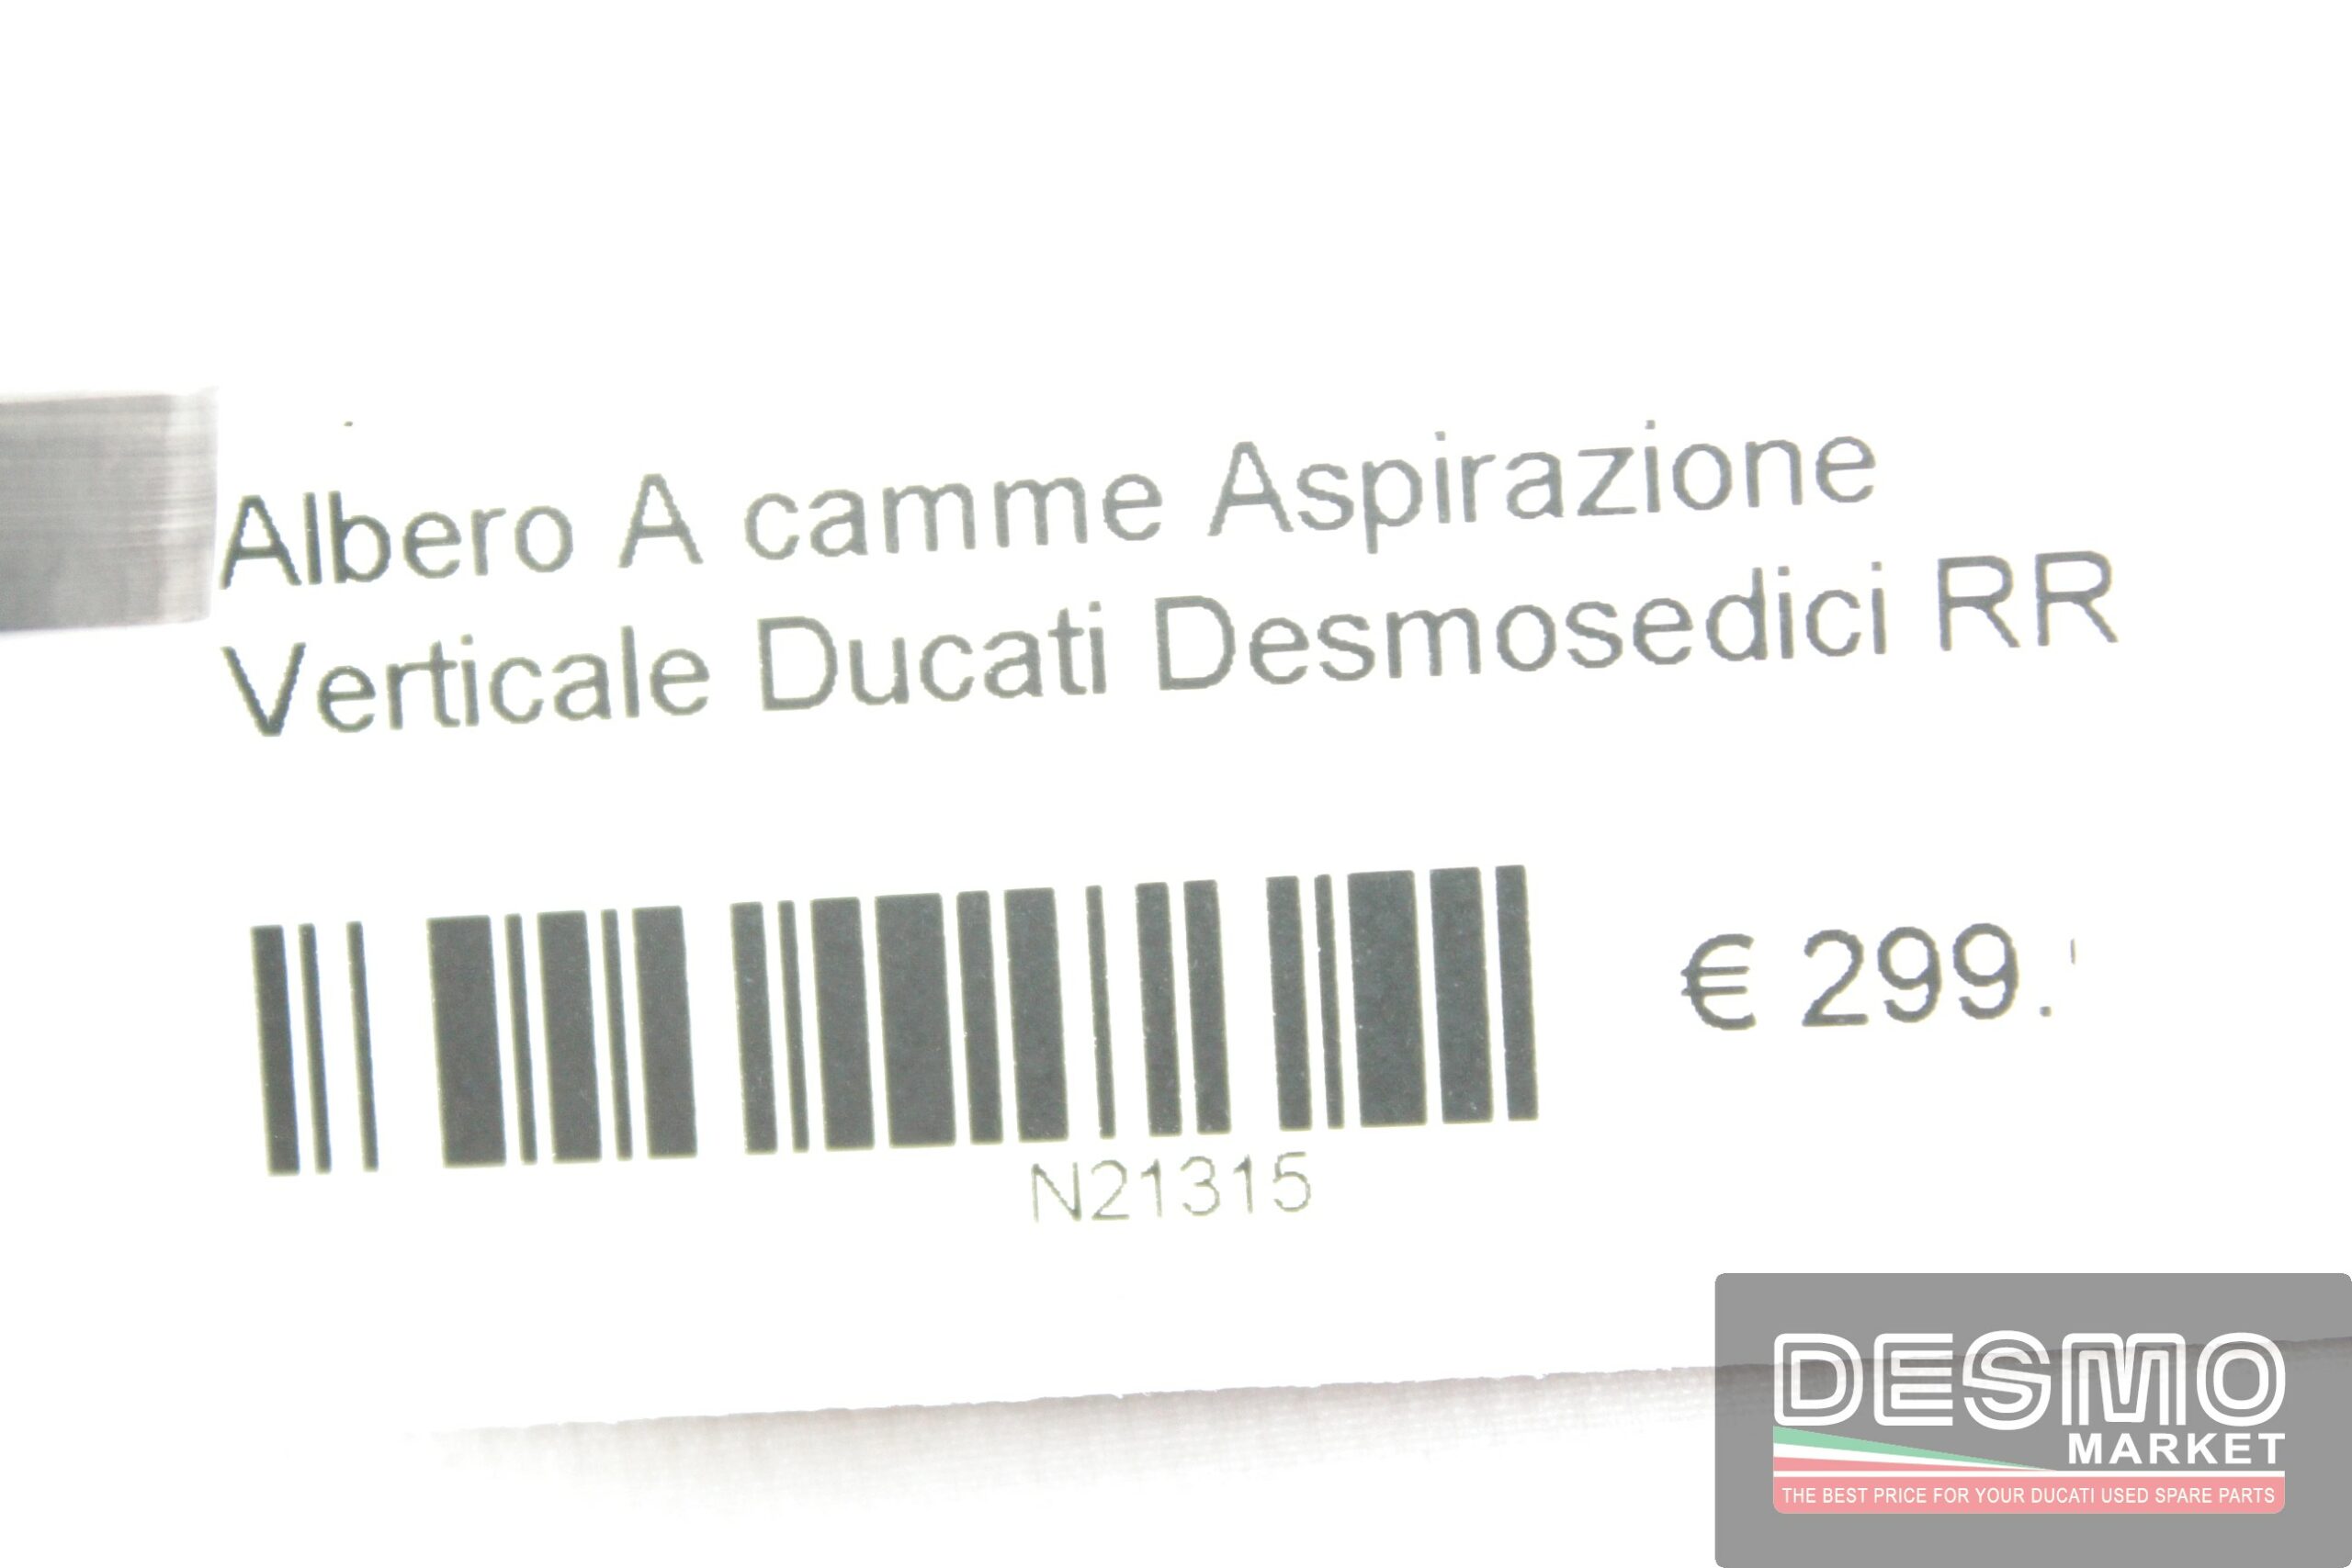 Camshaft vertical aspiration Ducati Desmosedici RR - Desmo Market